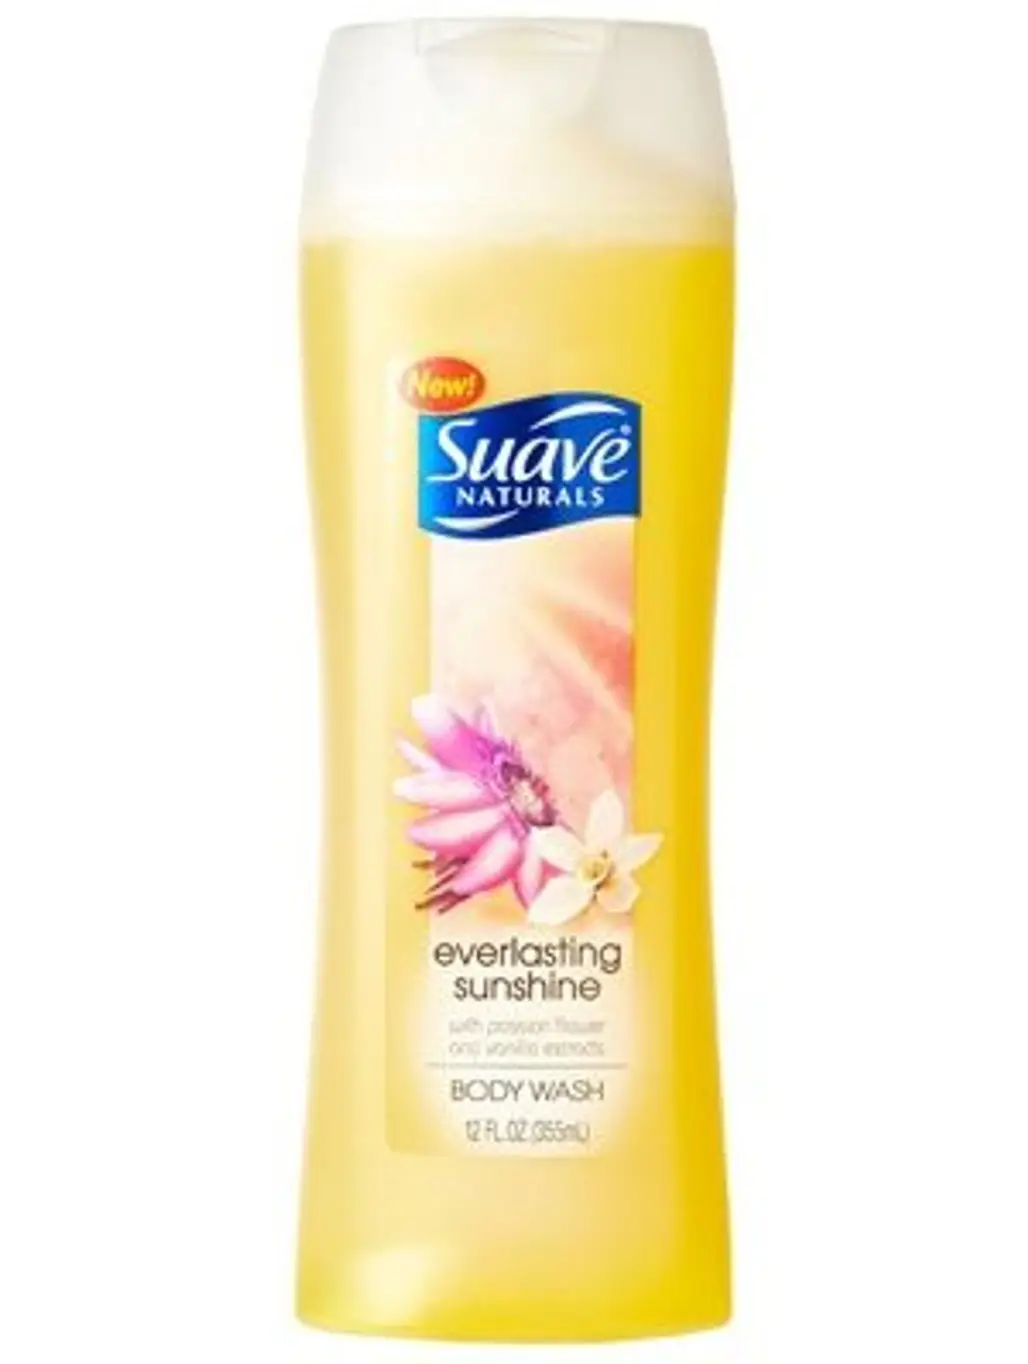 Suave Naturals Everlasting Sunshine Body Wash